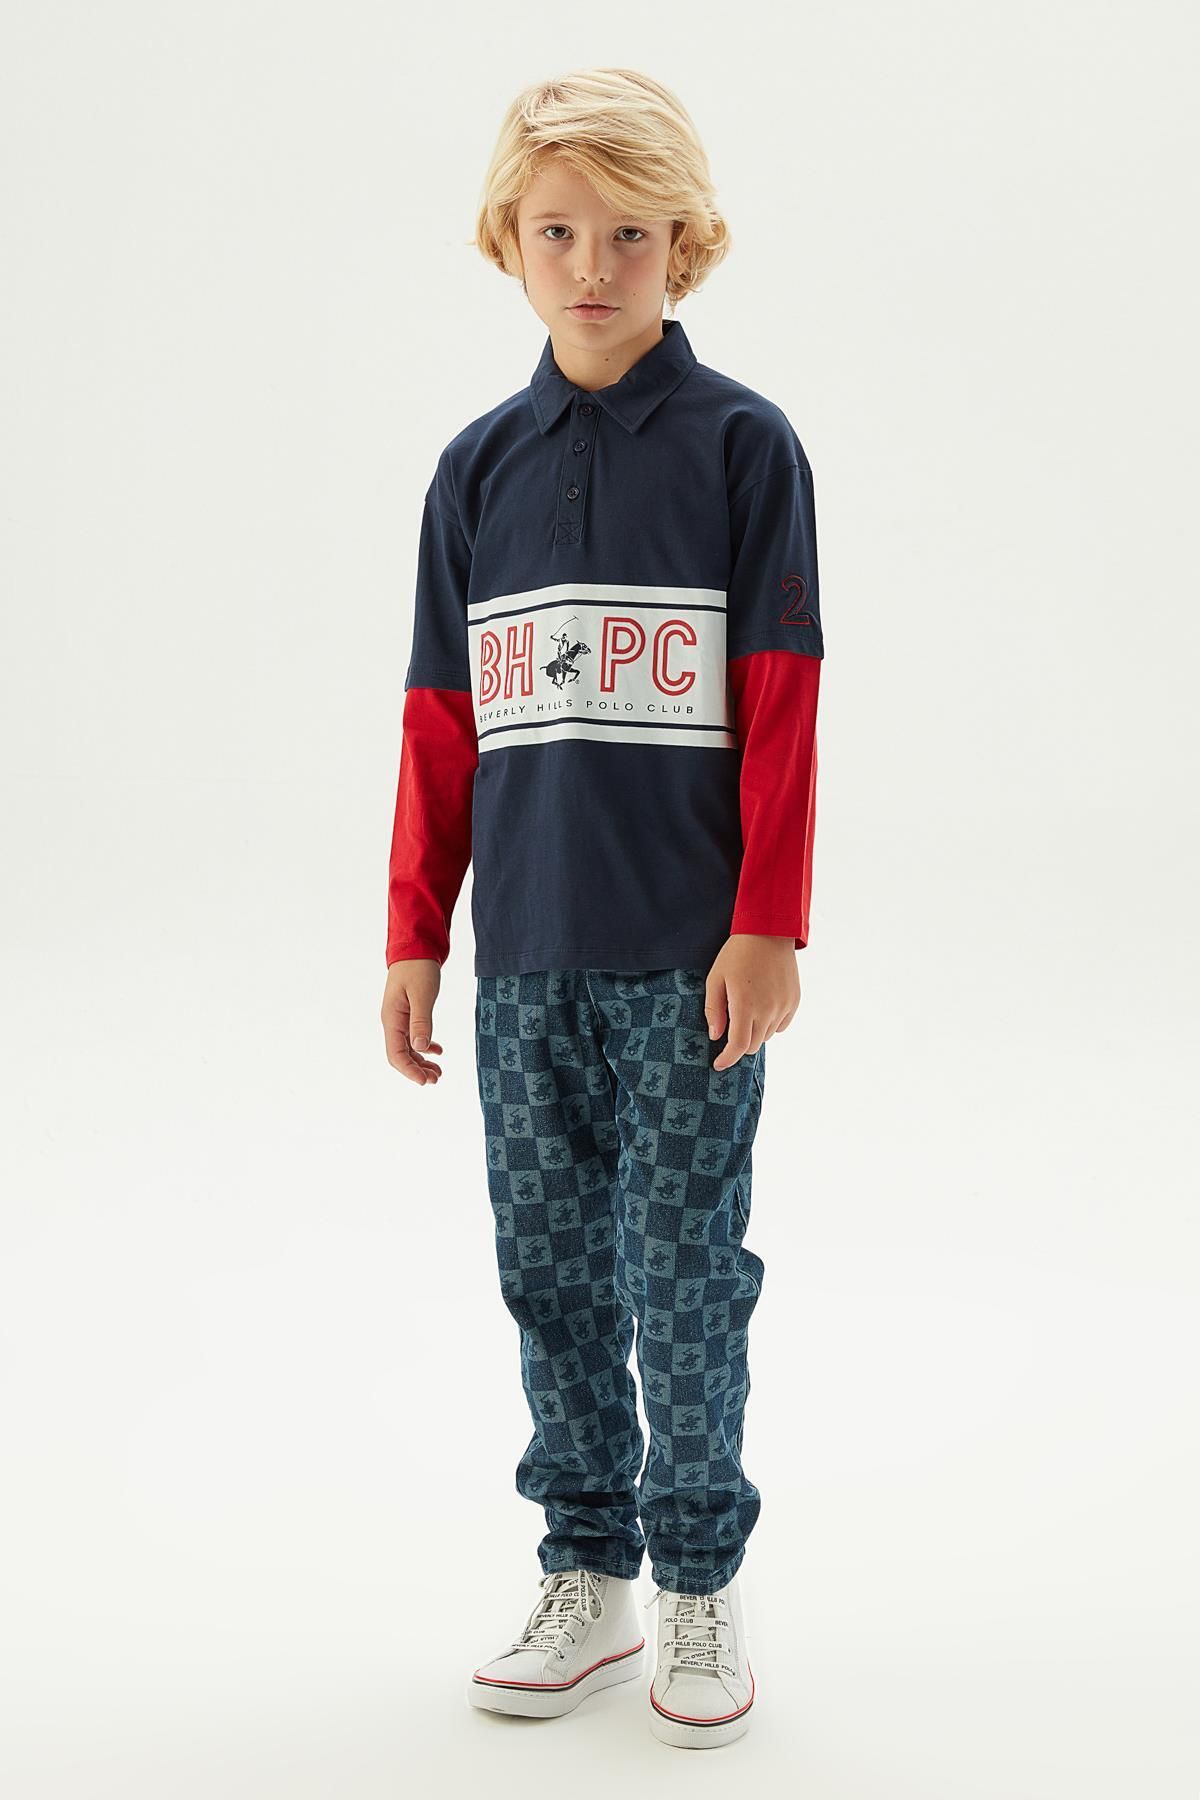 Beverly Hills Polo Club BG Store Erkek Çocuk Renkli T-Shirt 23PFWBHB501